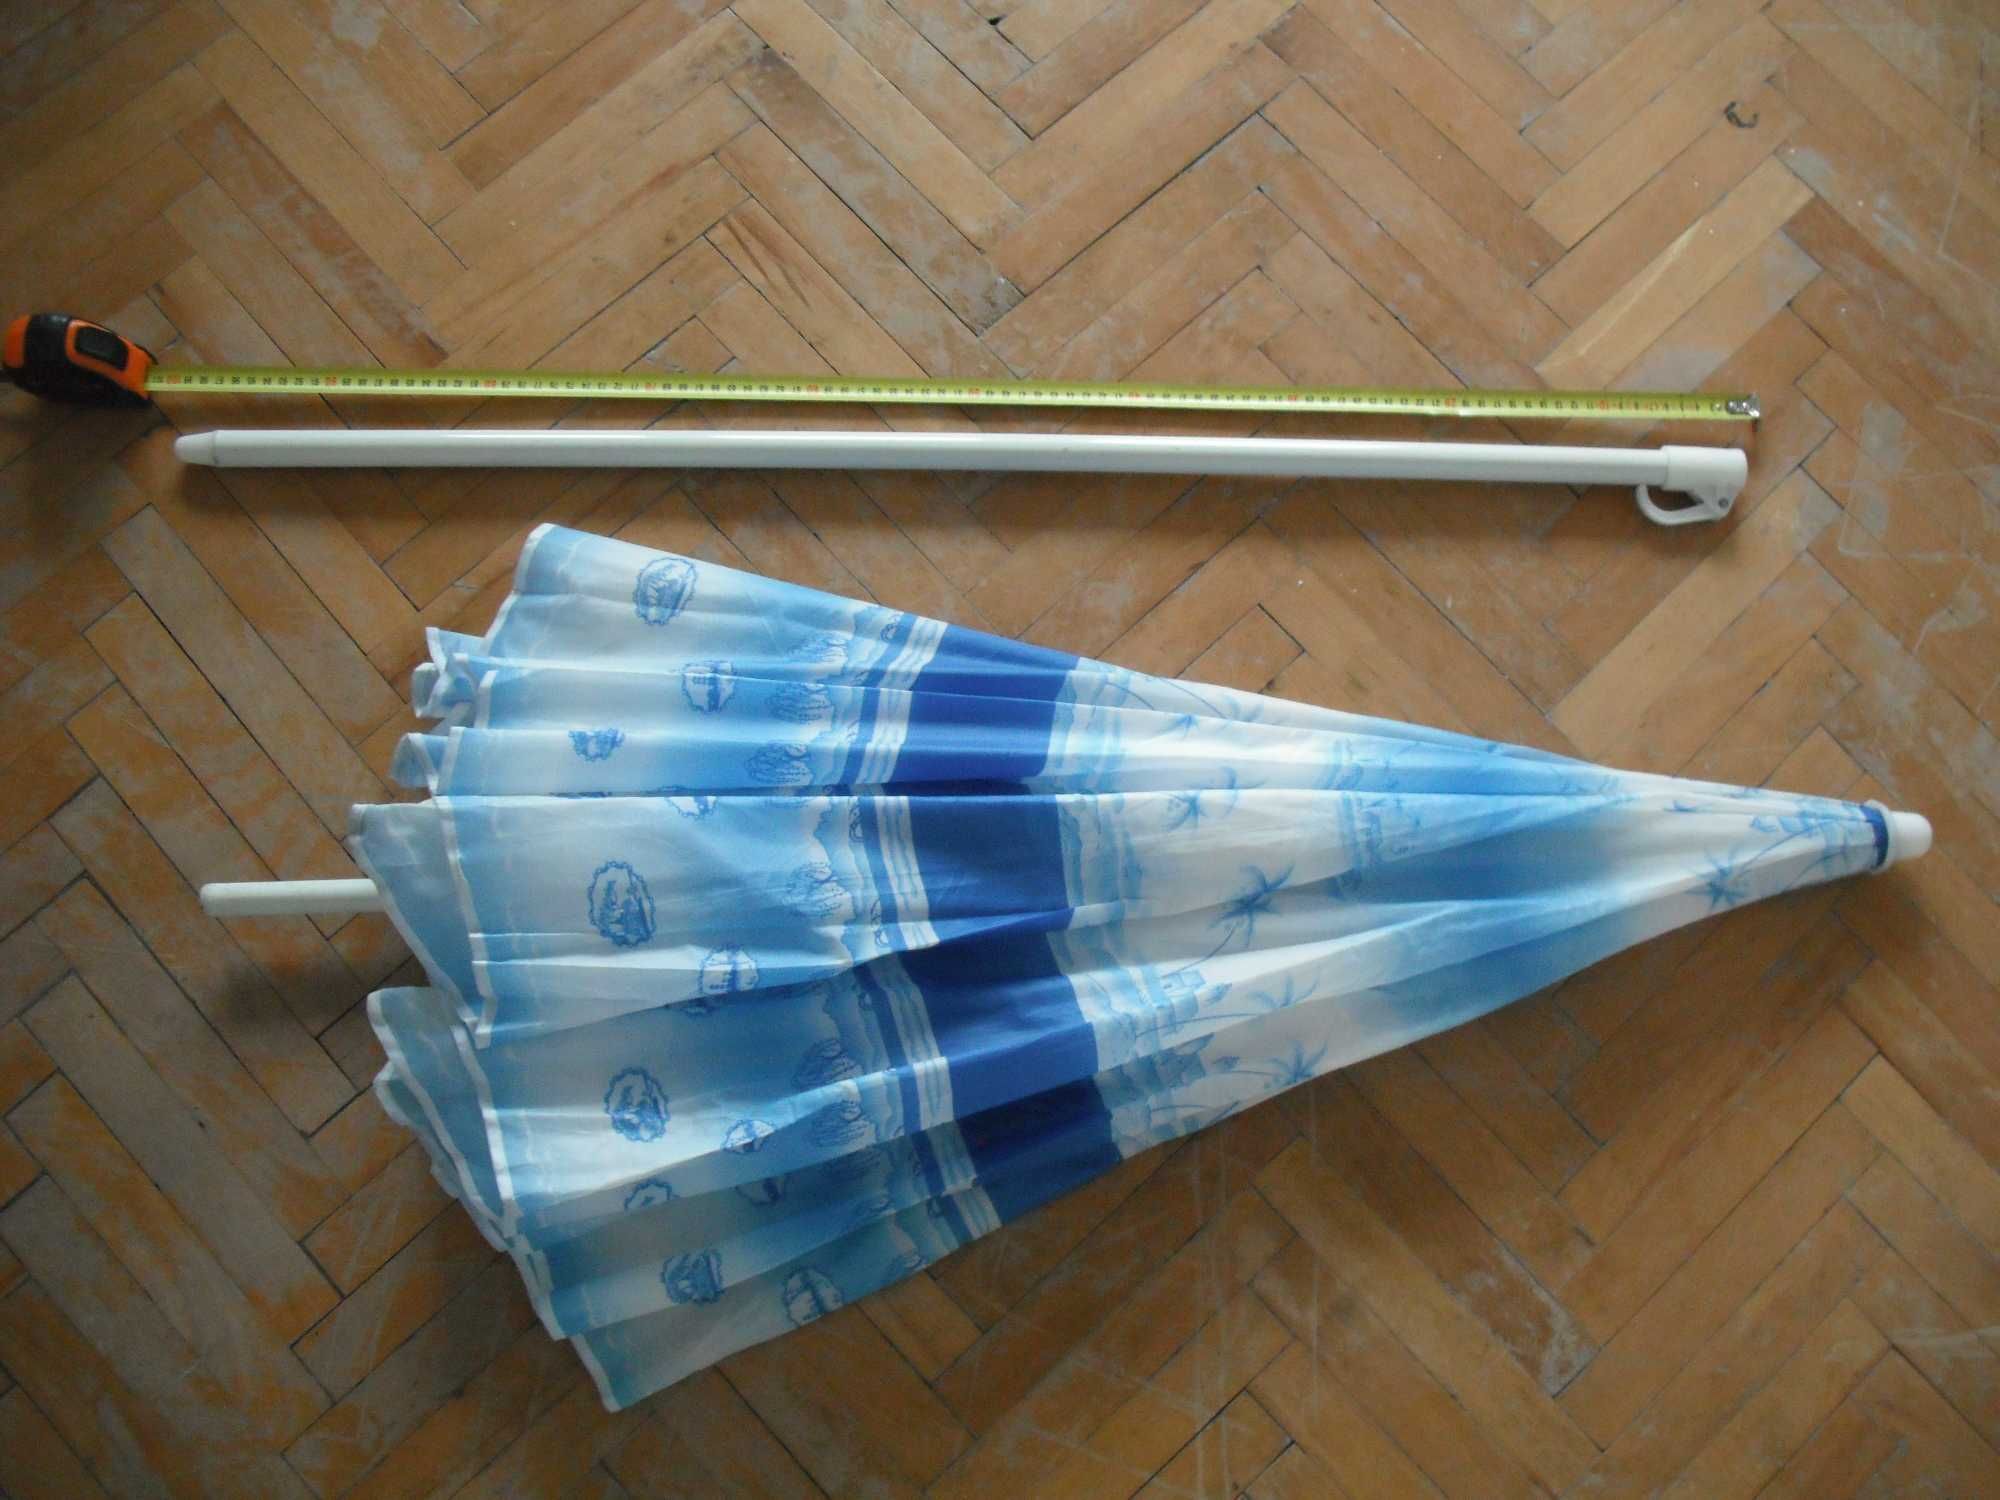 Umbrela soare / gradina / plaja / pescuit